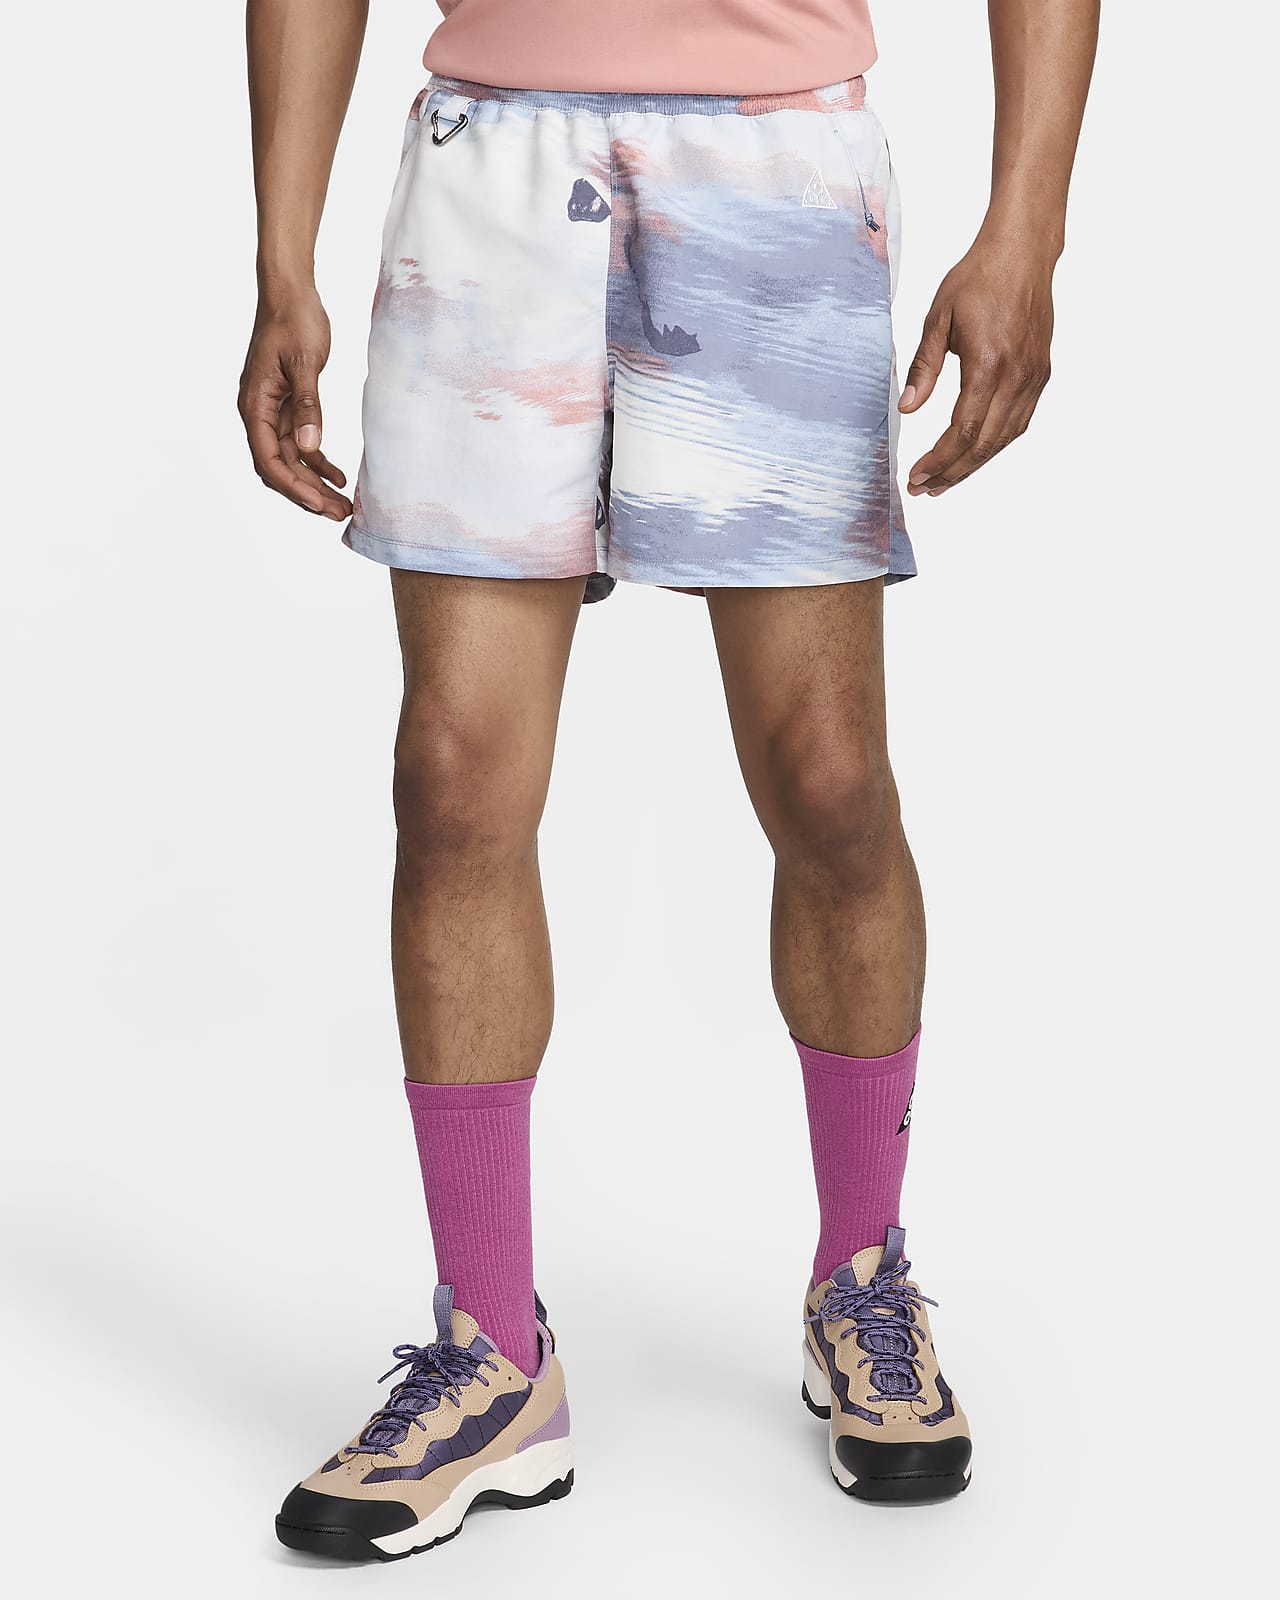 Nike ACG "Reservoir Goat" Herrenshorts mit durchgehendem Print